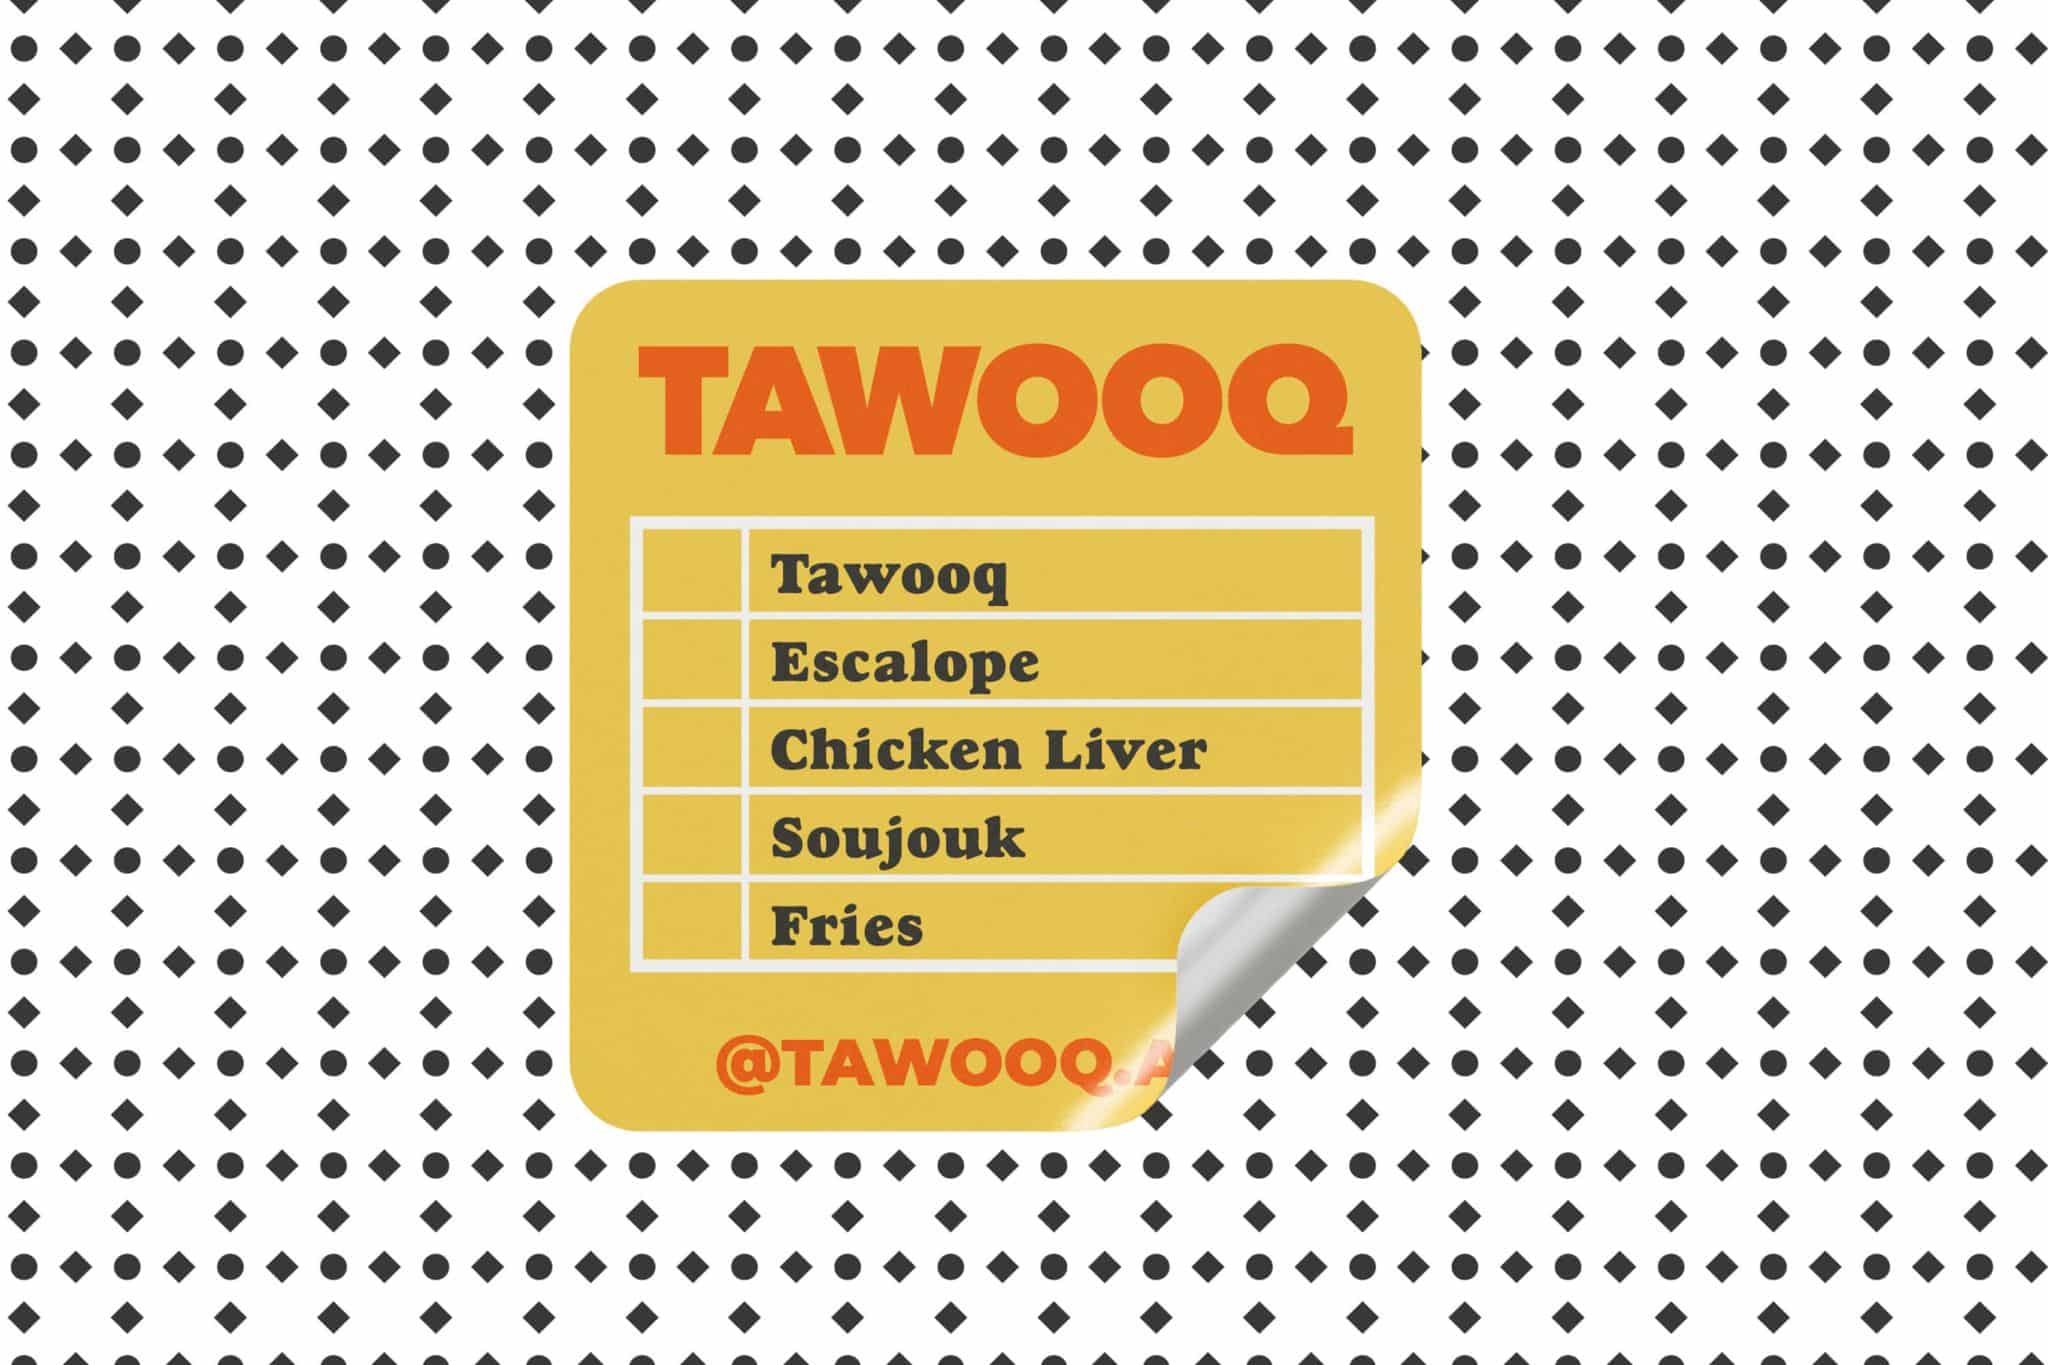 Tawooq branding project | f&b Branding by misfits 7